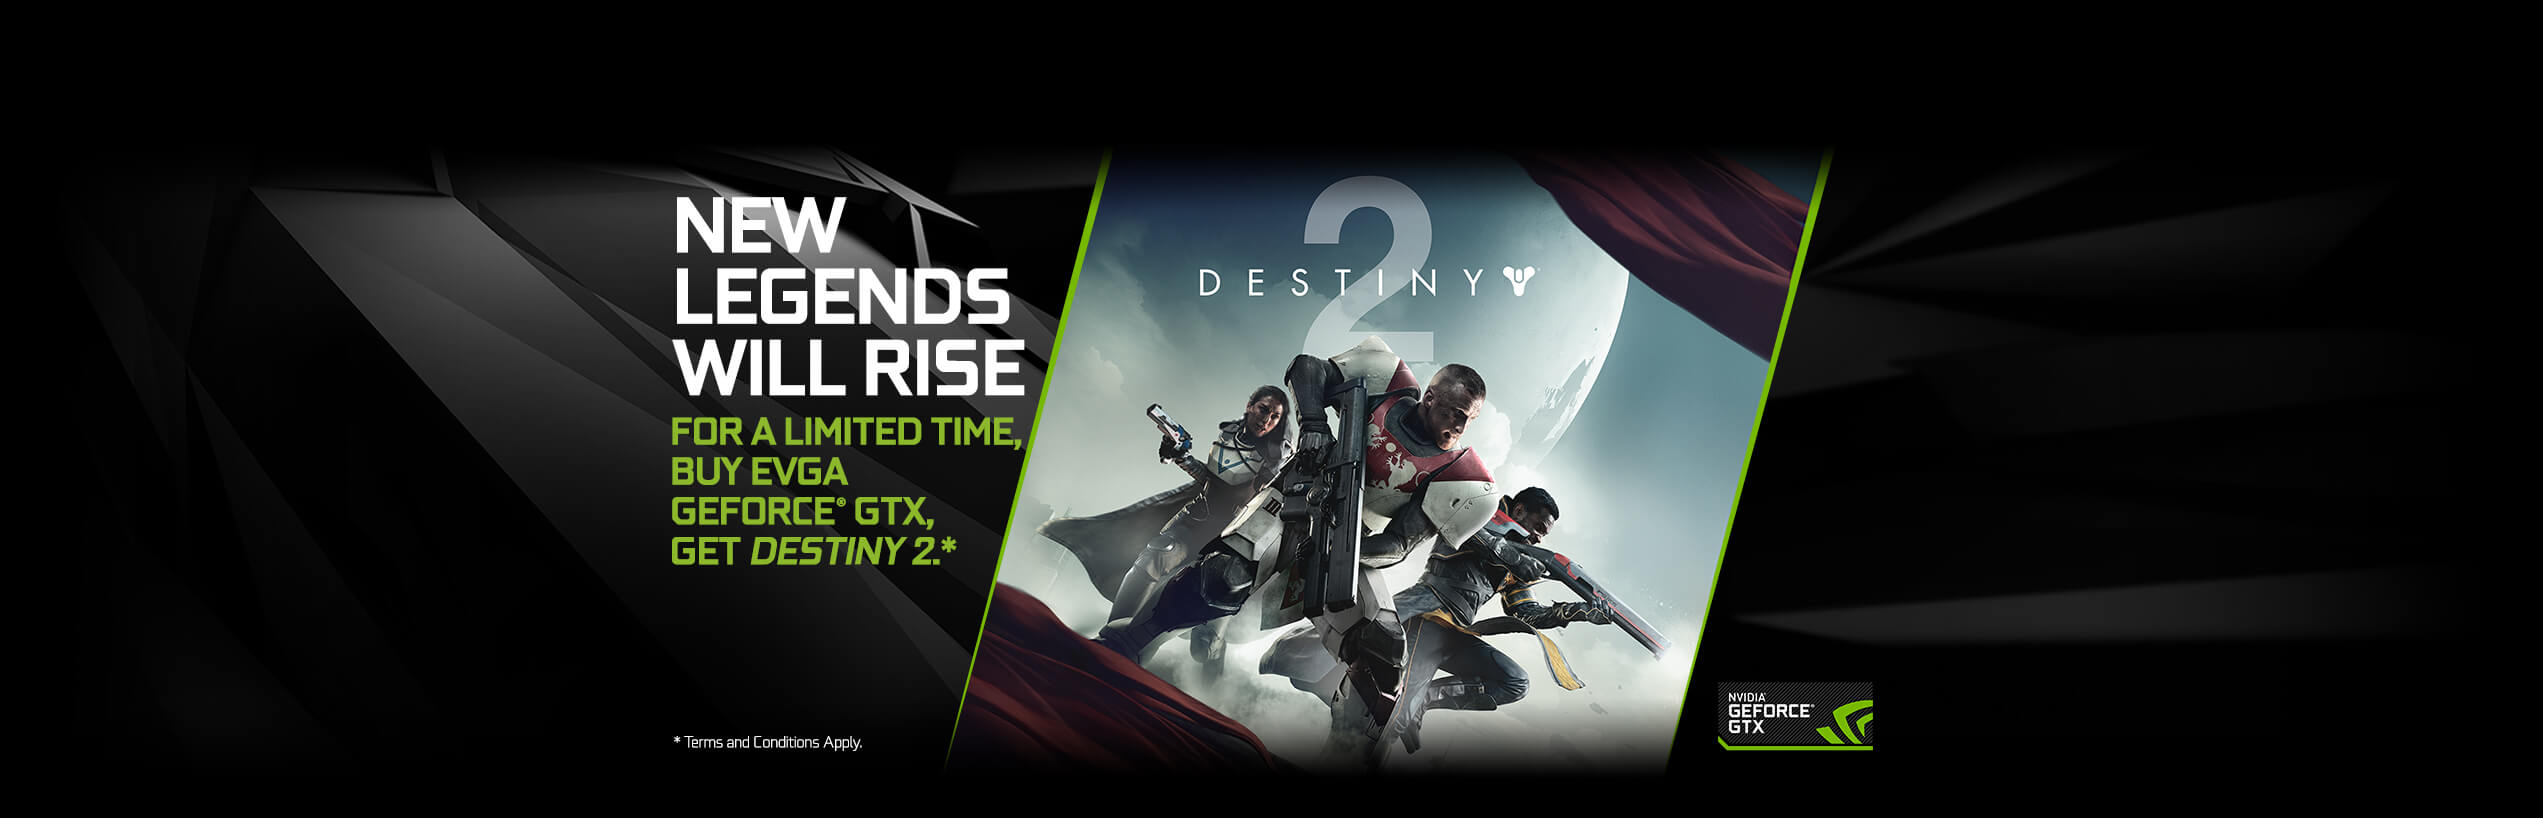 Destiny 2 - New Legends Will Rise